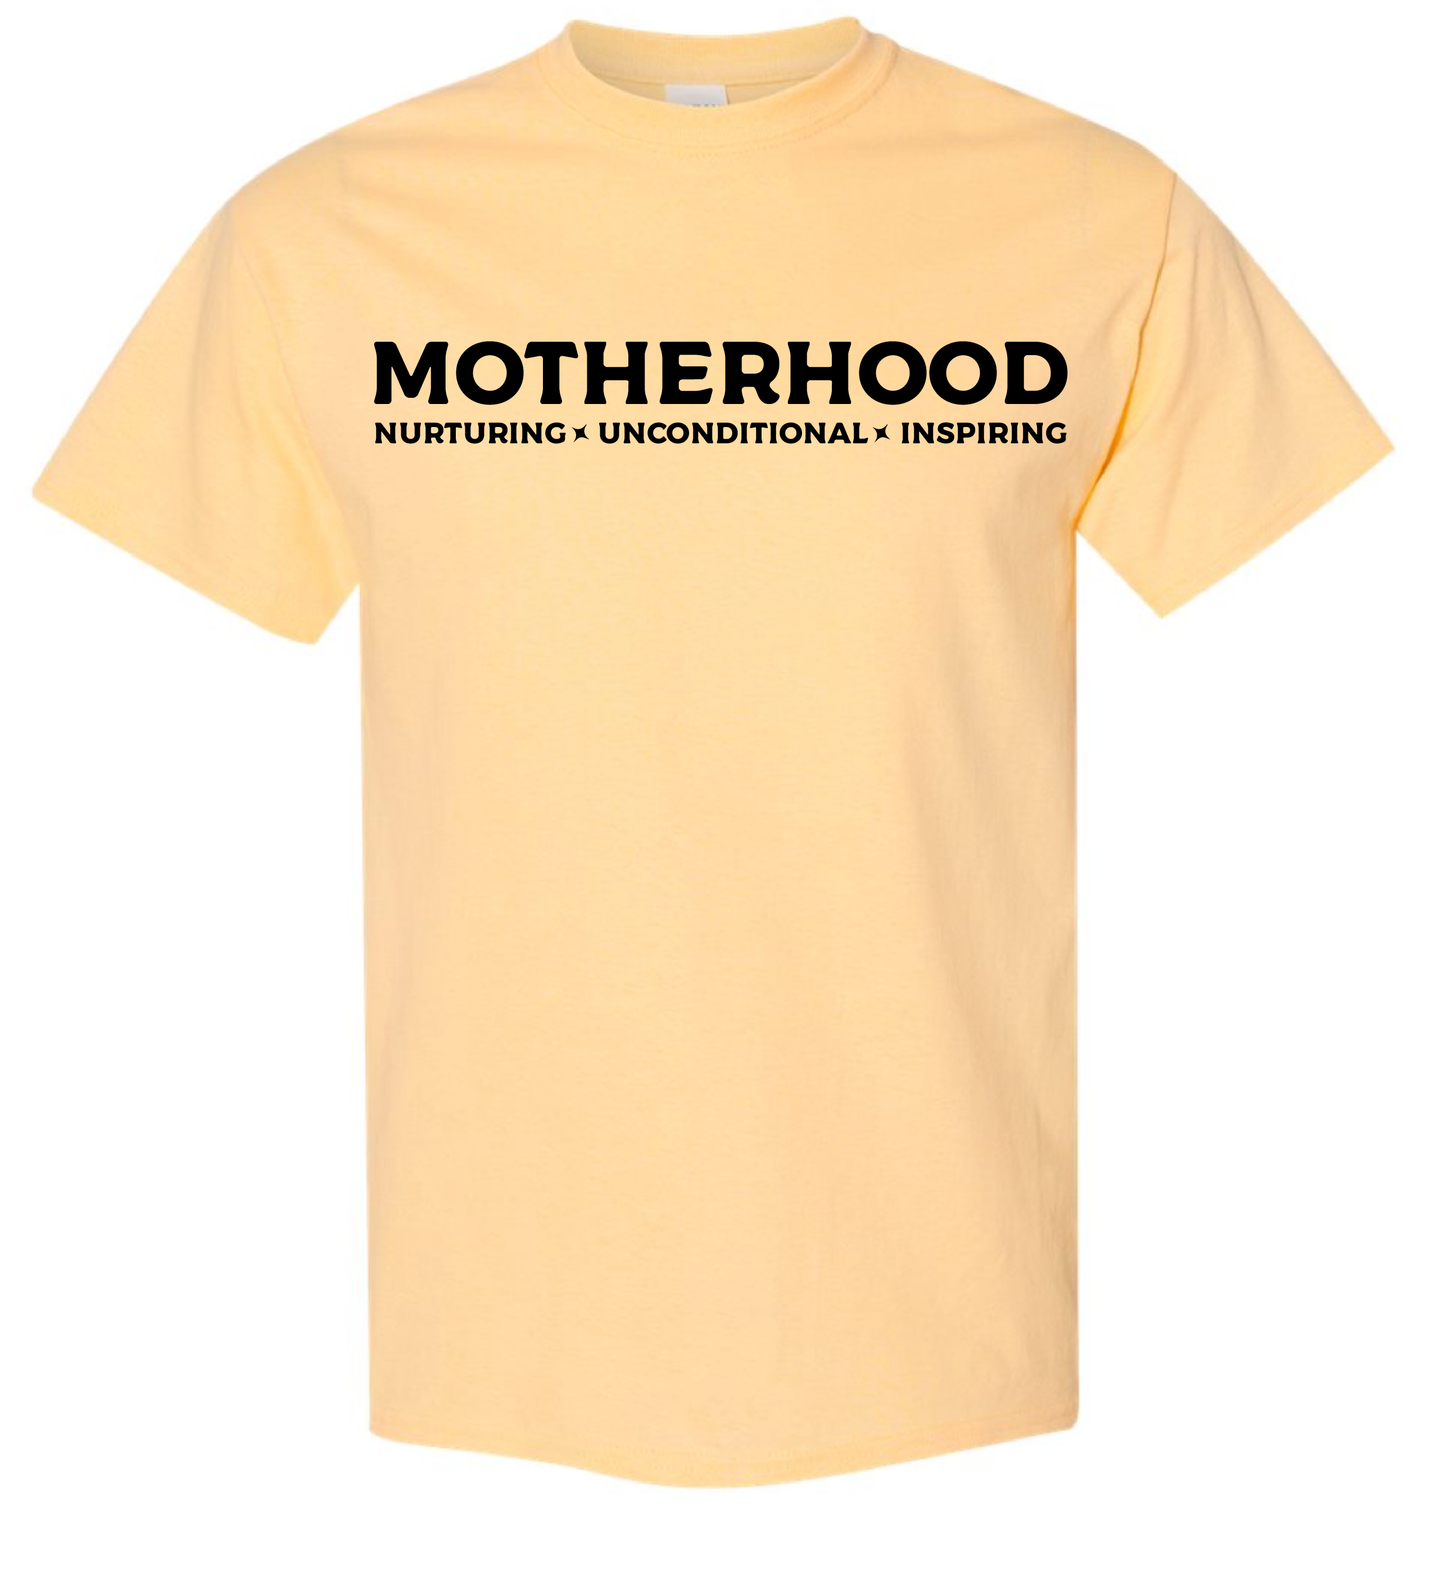 Motherhood T-shirt | Nurturing, Unconditional, and Inspiring